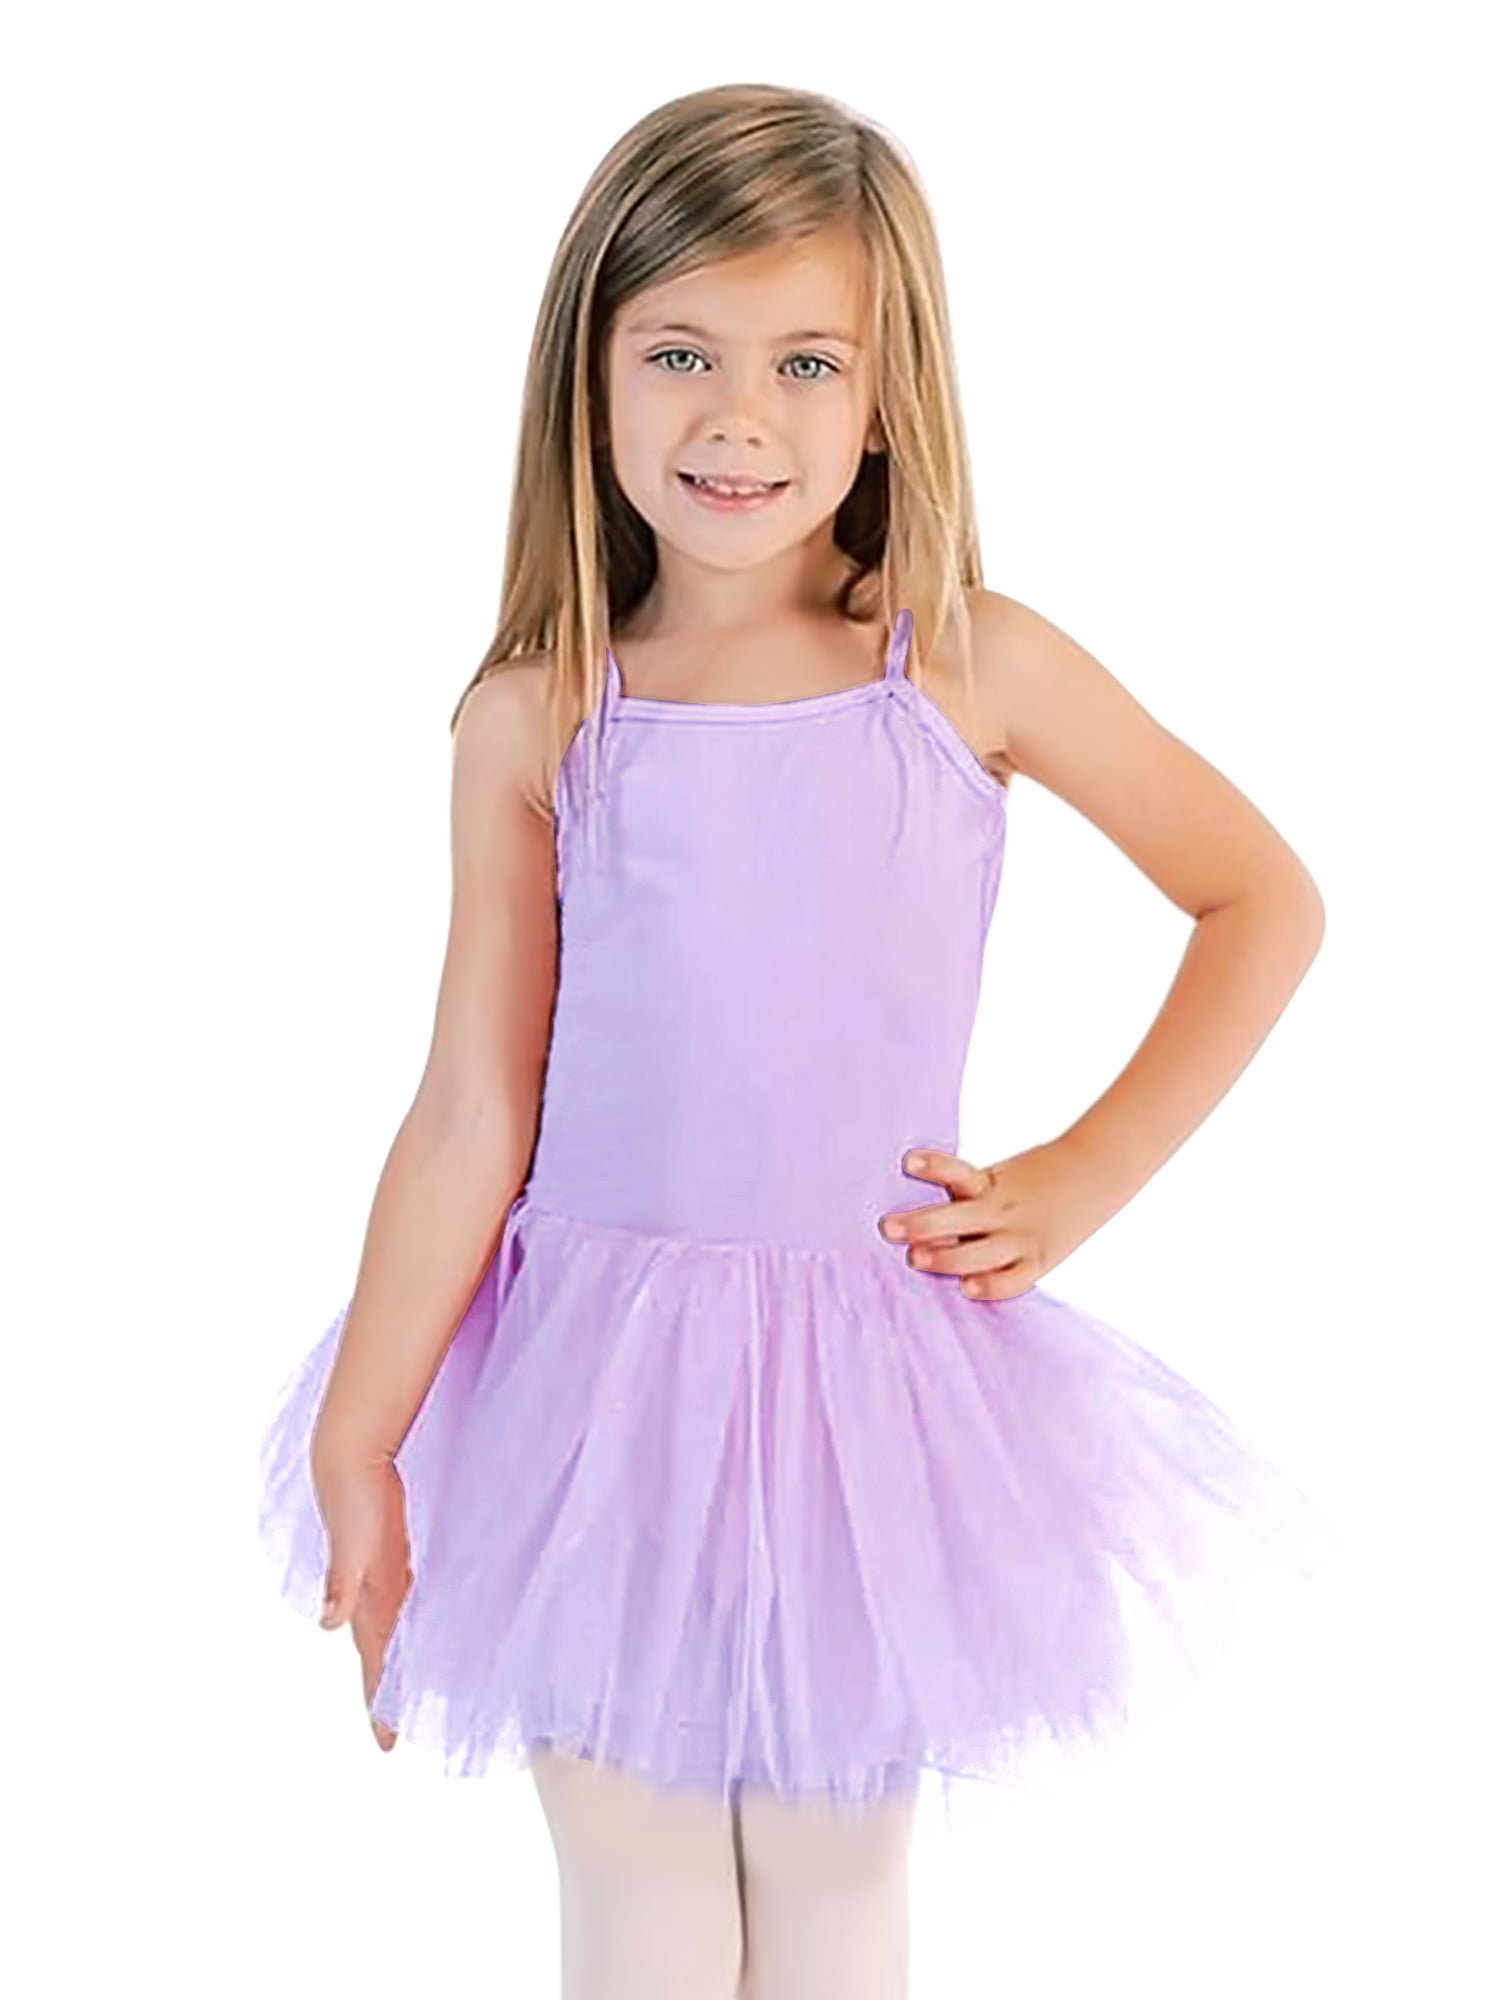 STELLE Toddler/Girls Cute Tutu Dress Ballet Leotard for Dance